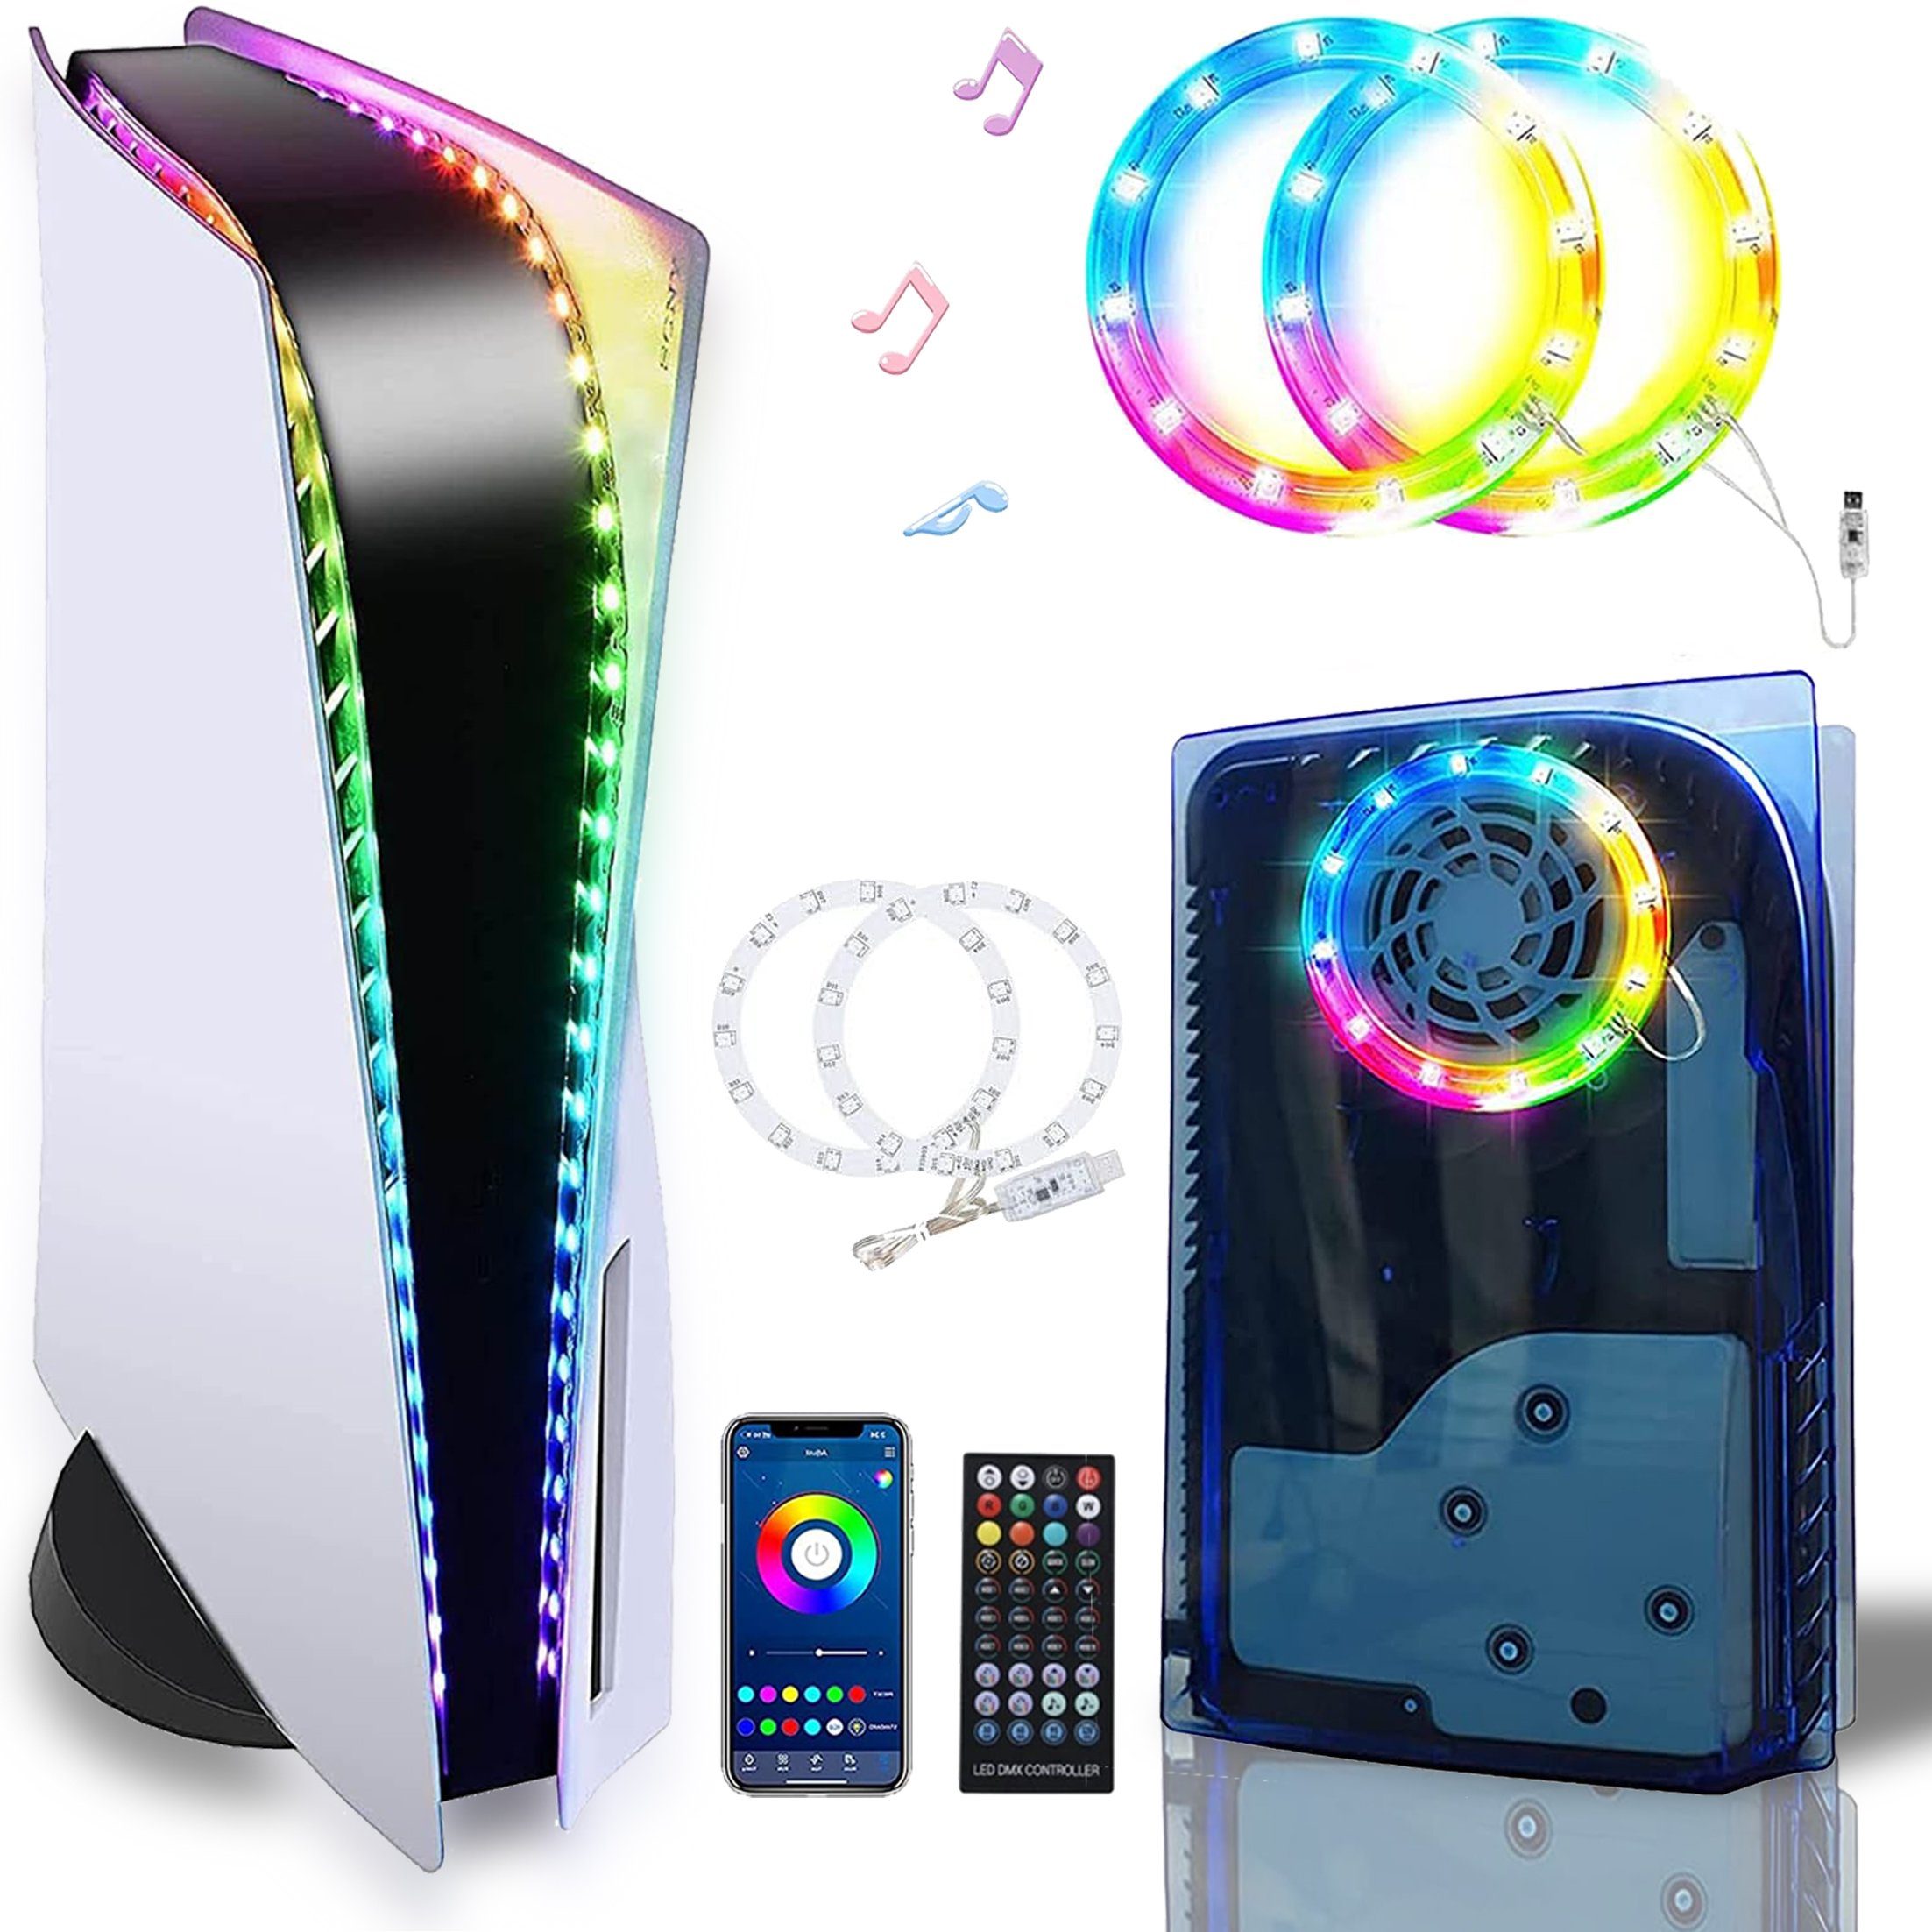 Tadow PS5-Konsole LED-Lichtleiste, USB-Taste/Fernbedienung/App, 8 Farben PlayStation 5-Controller